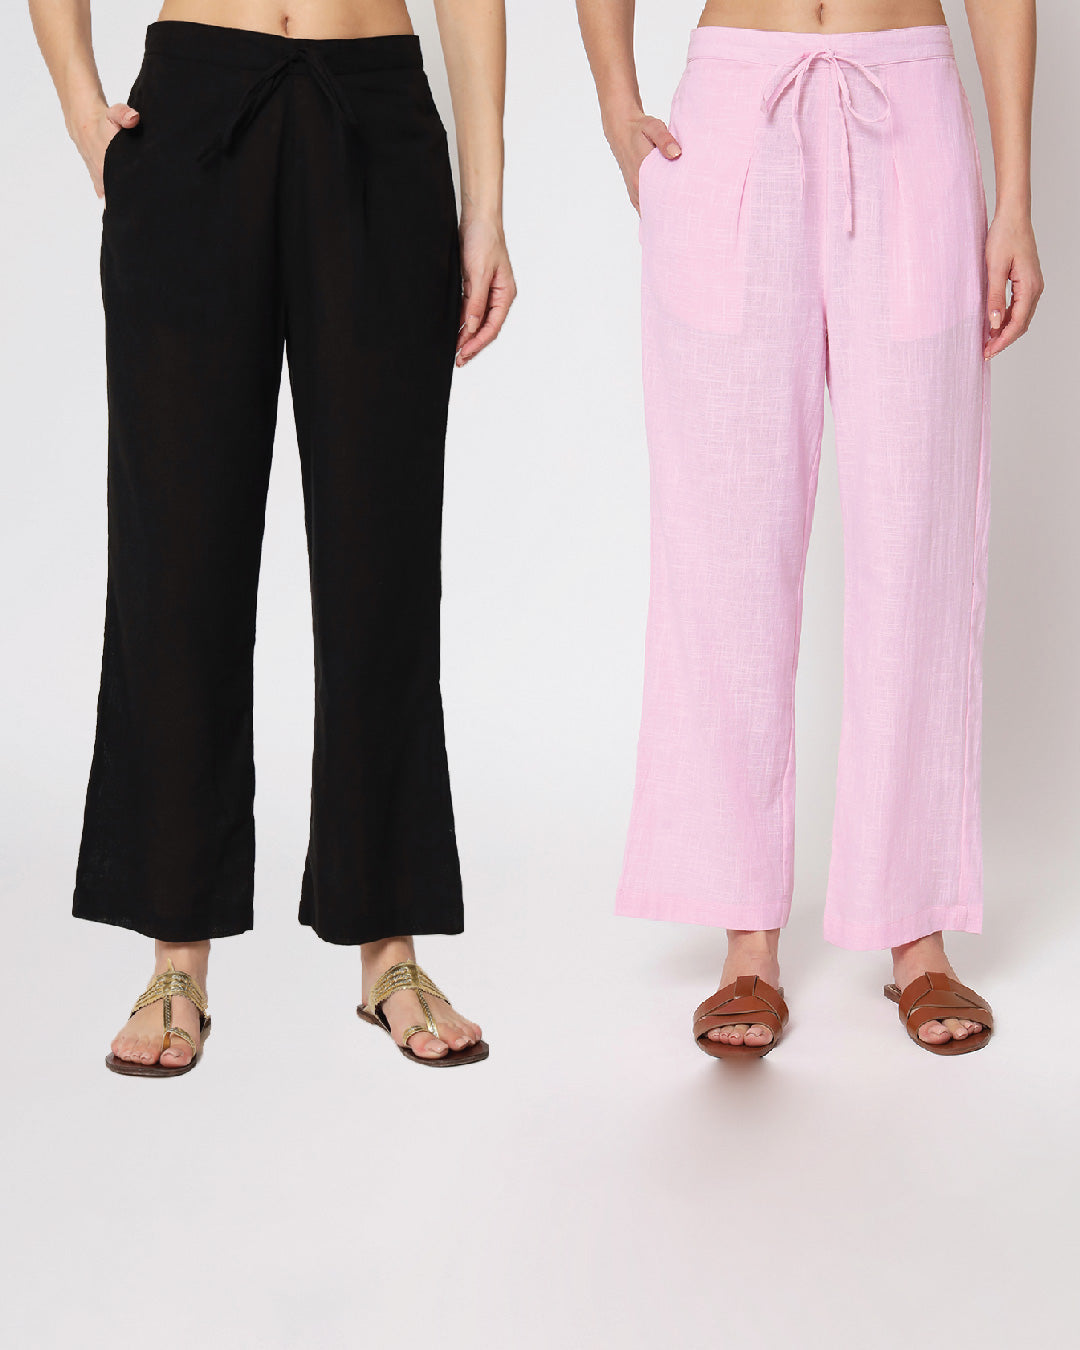 Combo: Black & Pink Mist Straight Pants- Set of 2